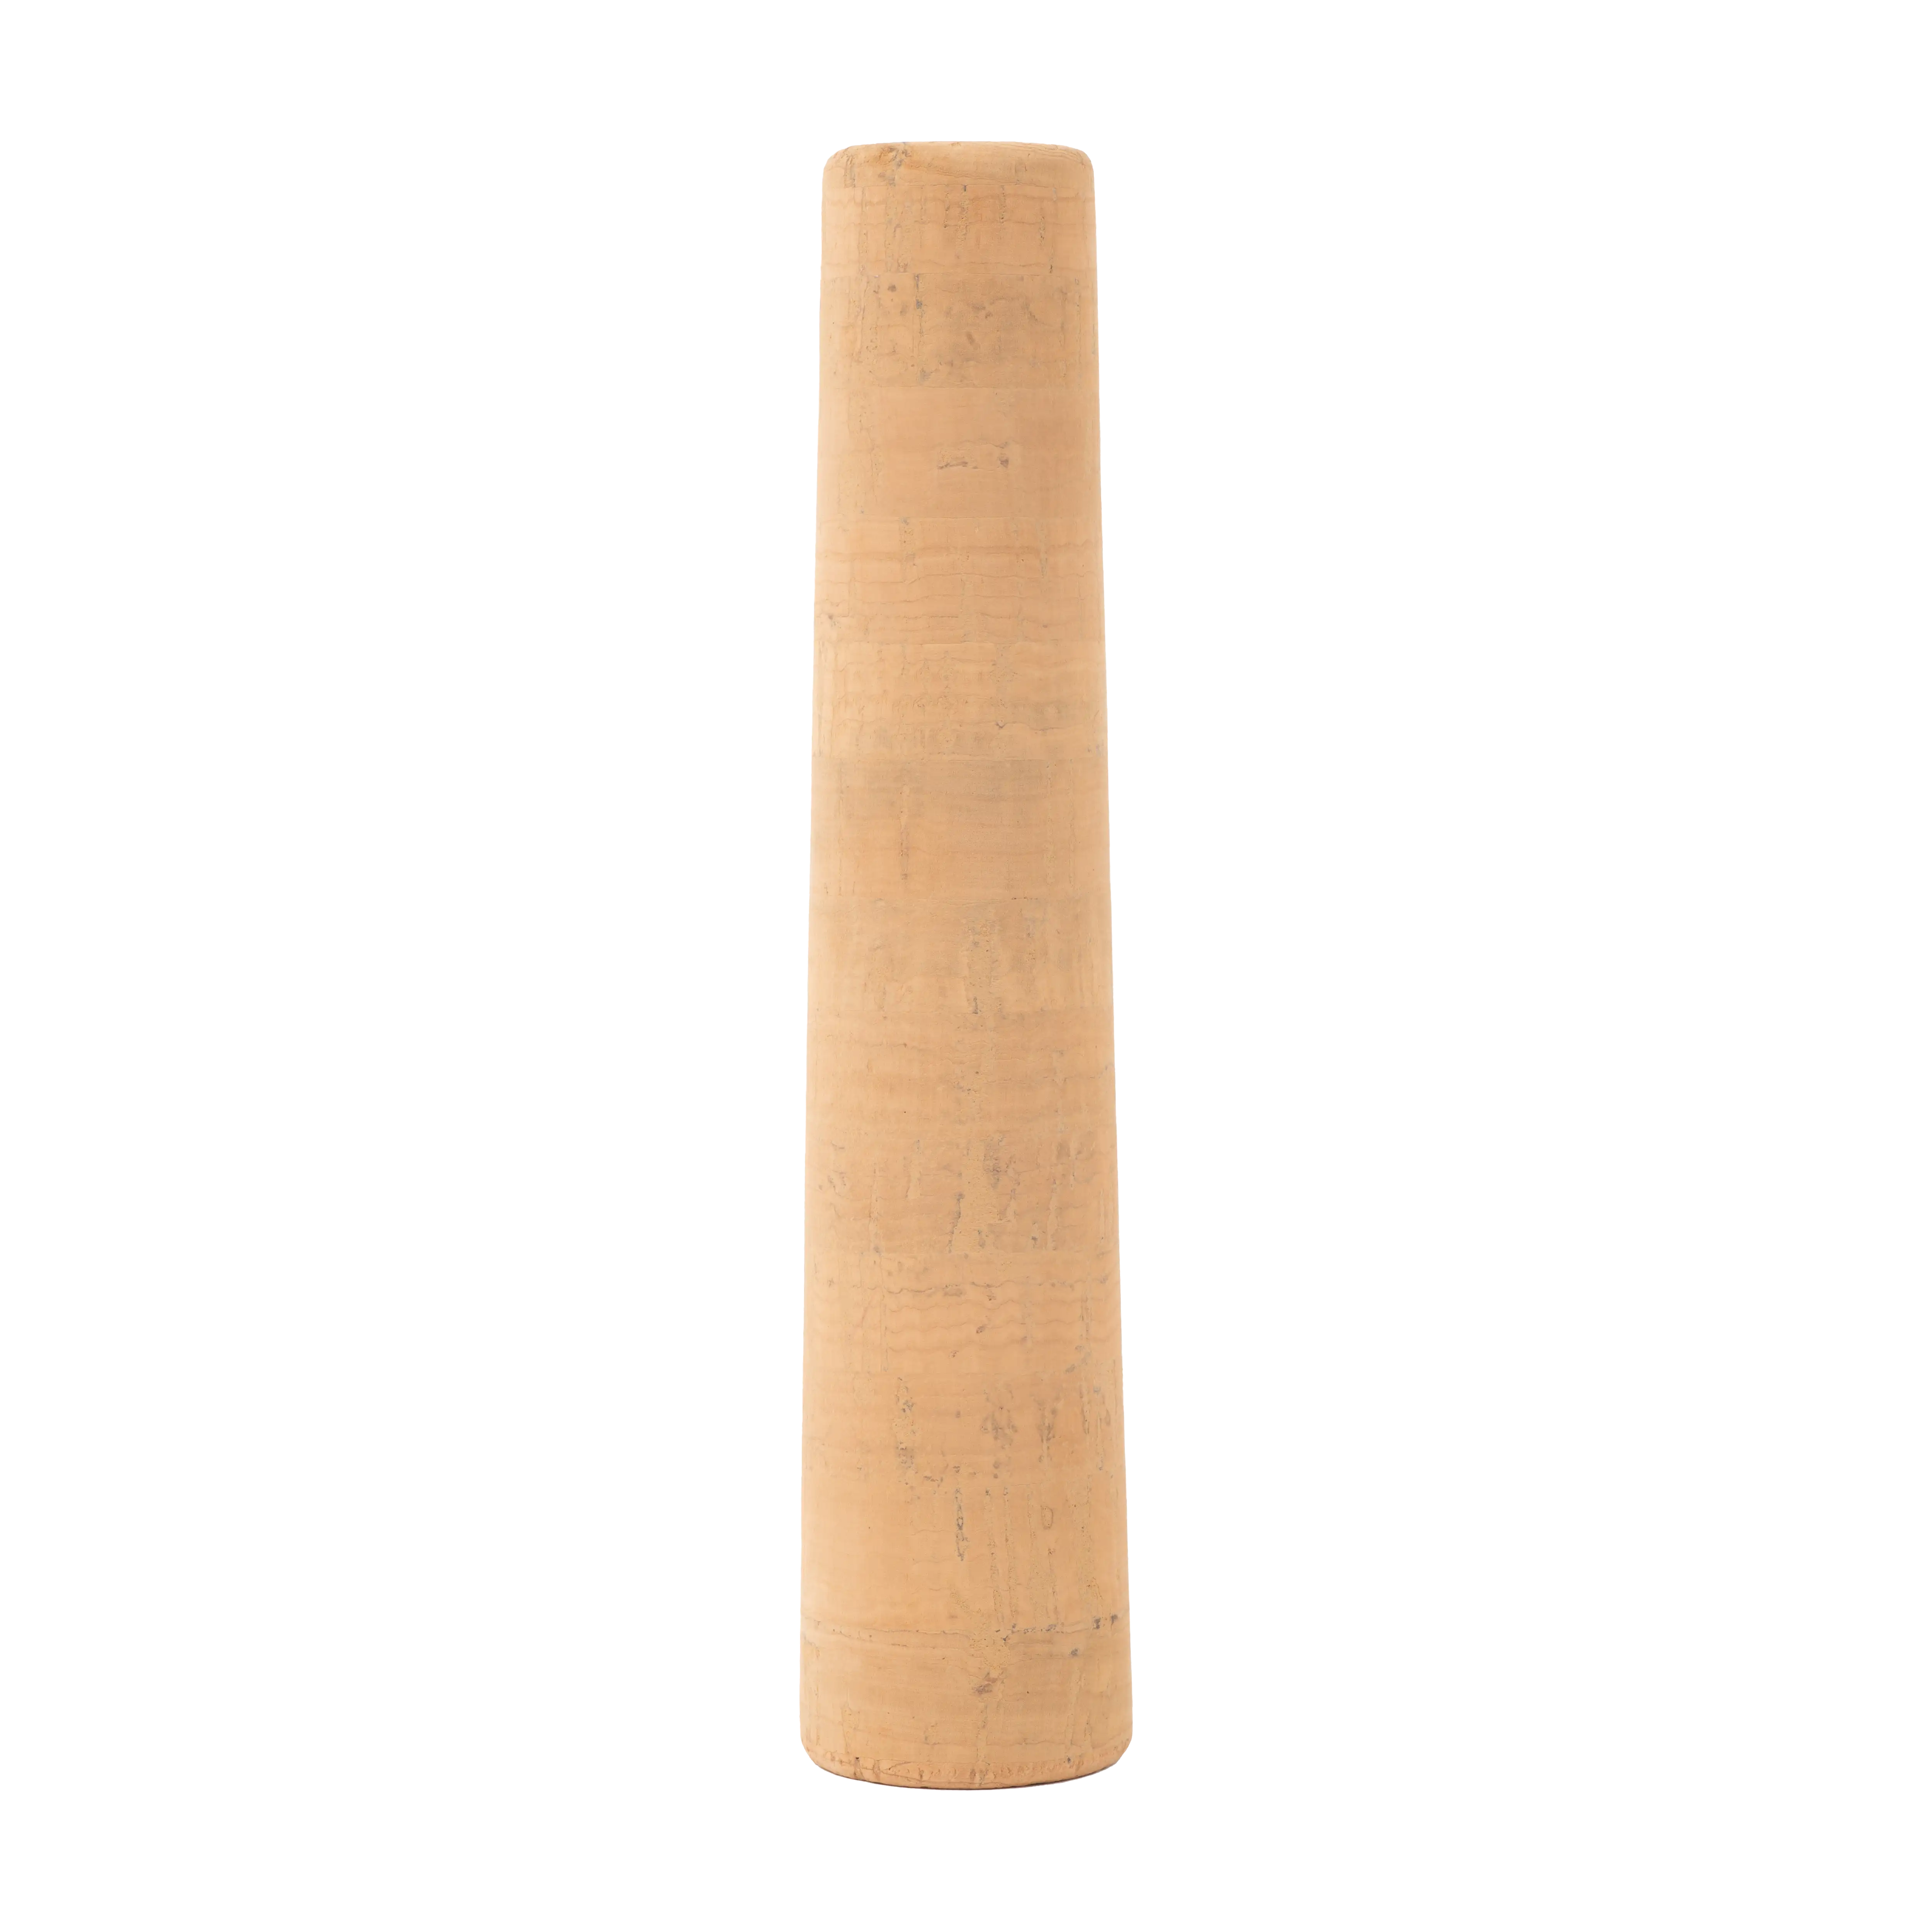 Large Diameter Cork Fore Grip